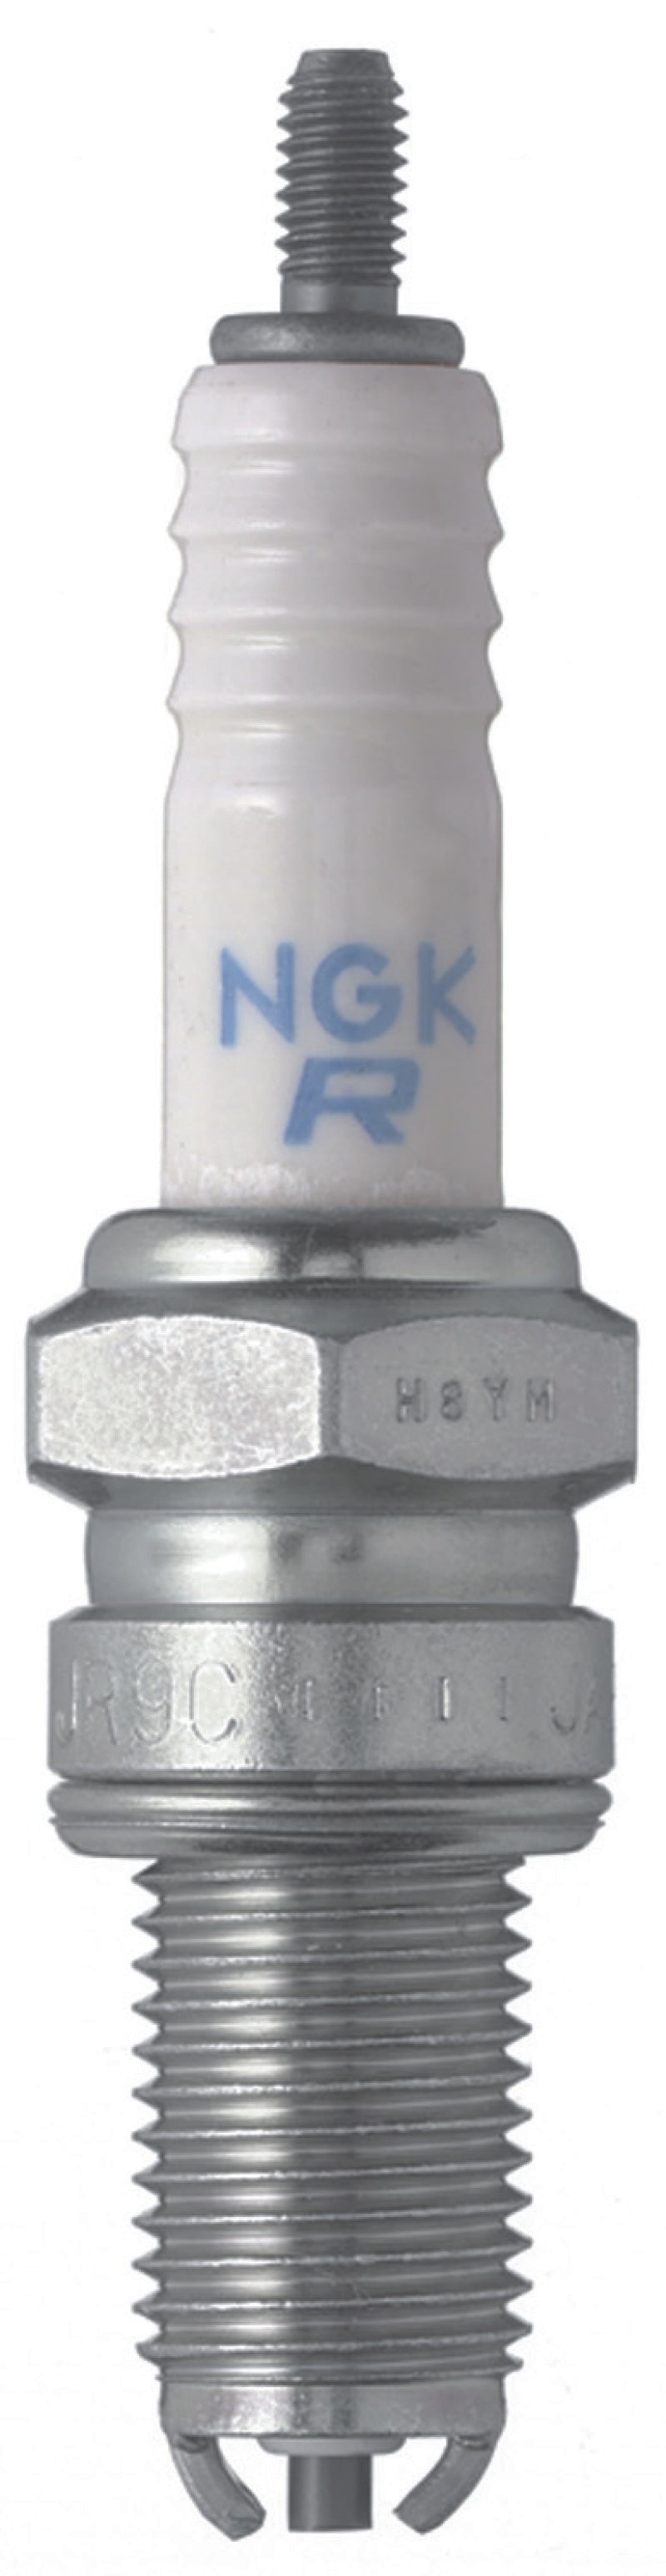 NGK Standard Spark Plug Box of 10 (JR9C) -  Shop now at Performance Car Parts